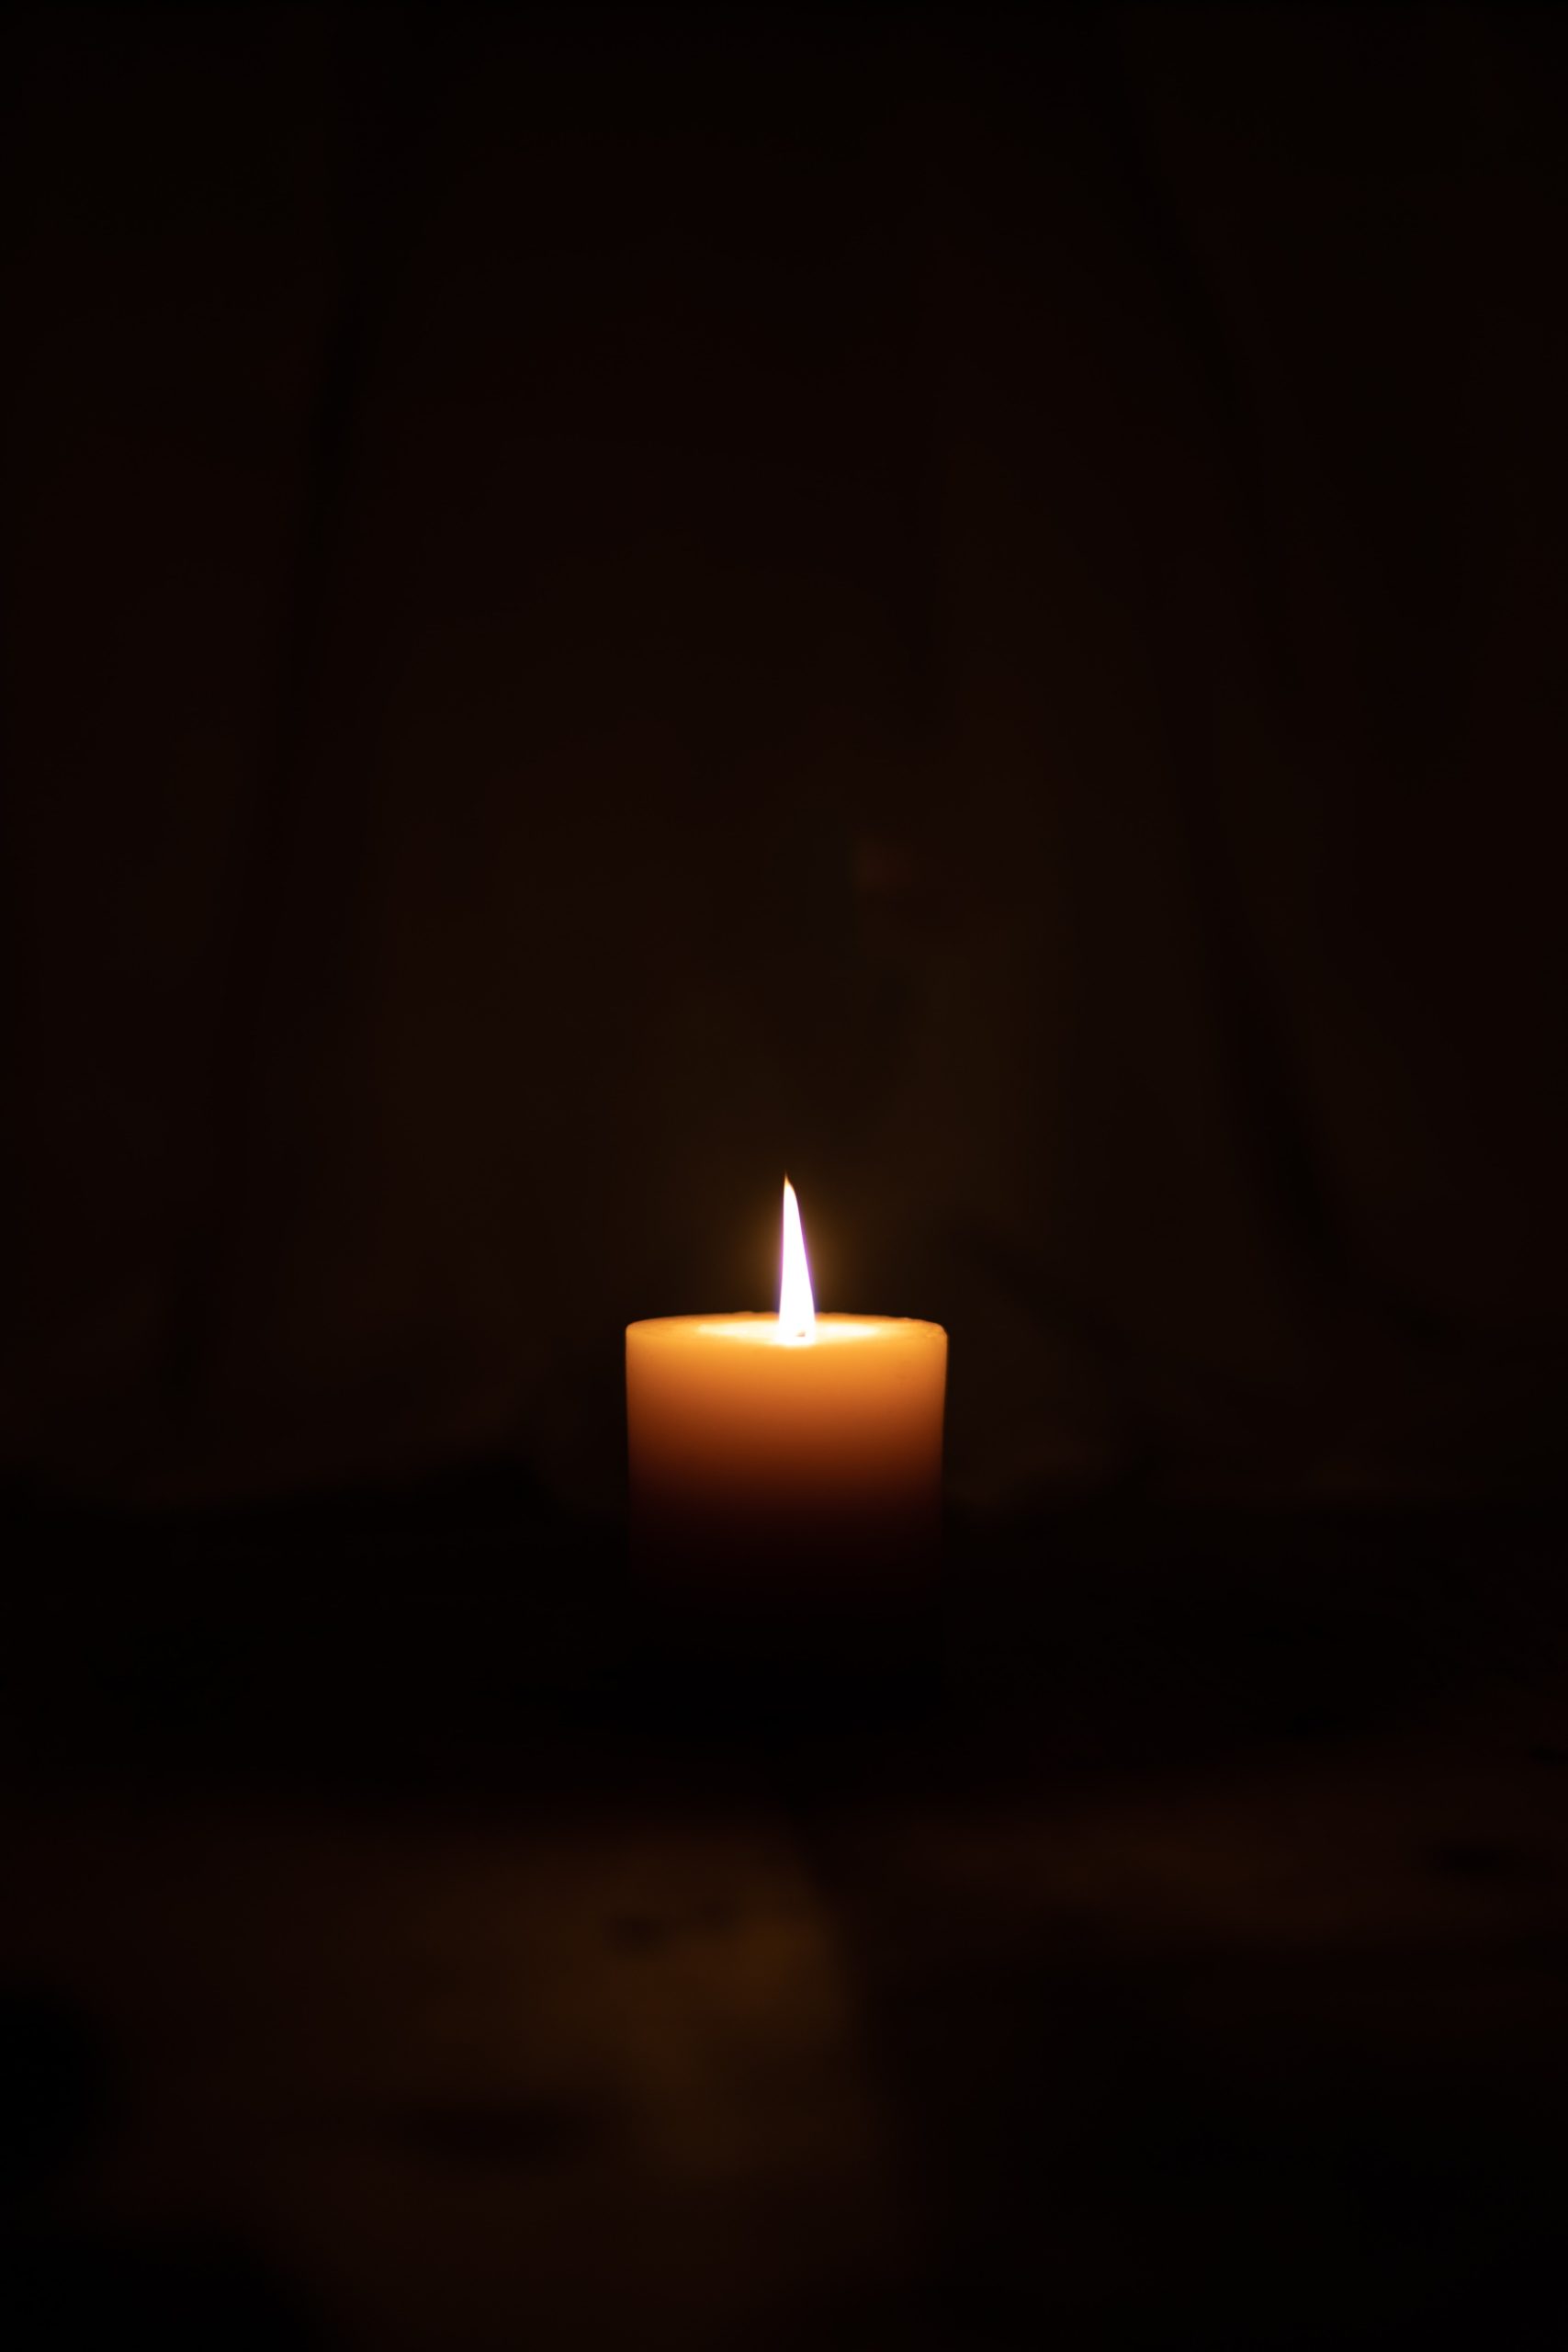 single candle glowing